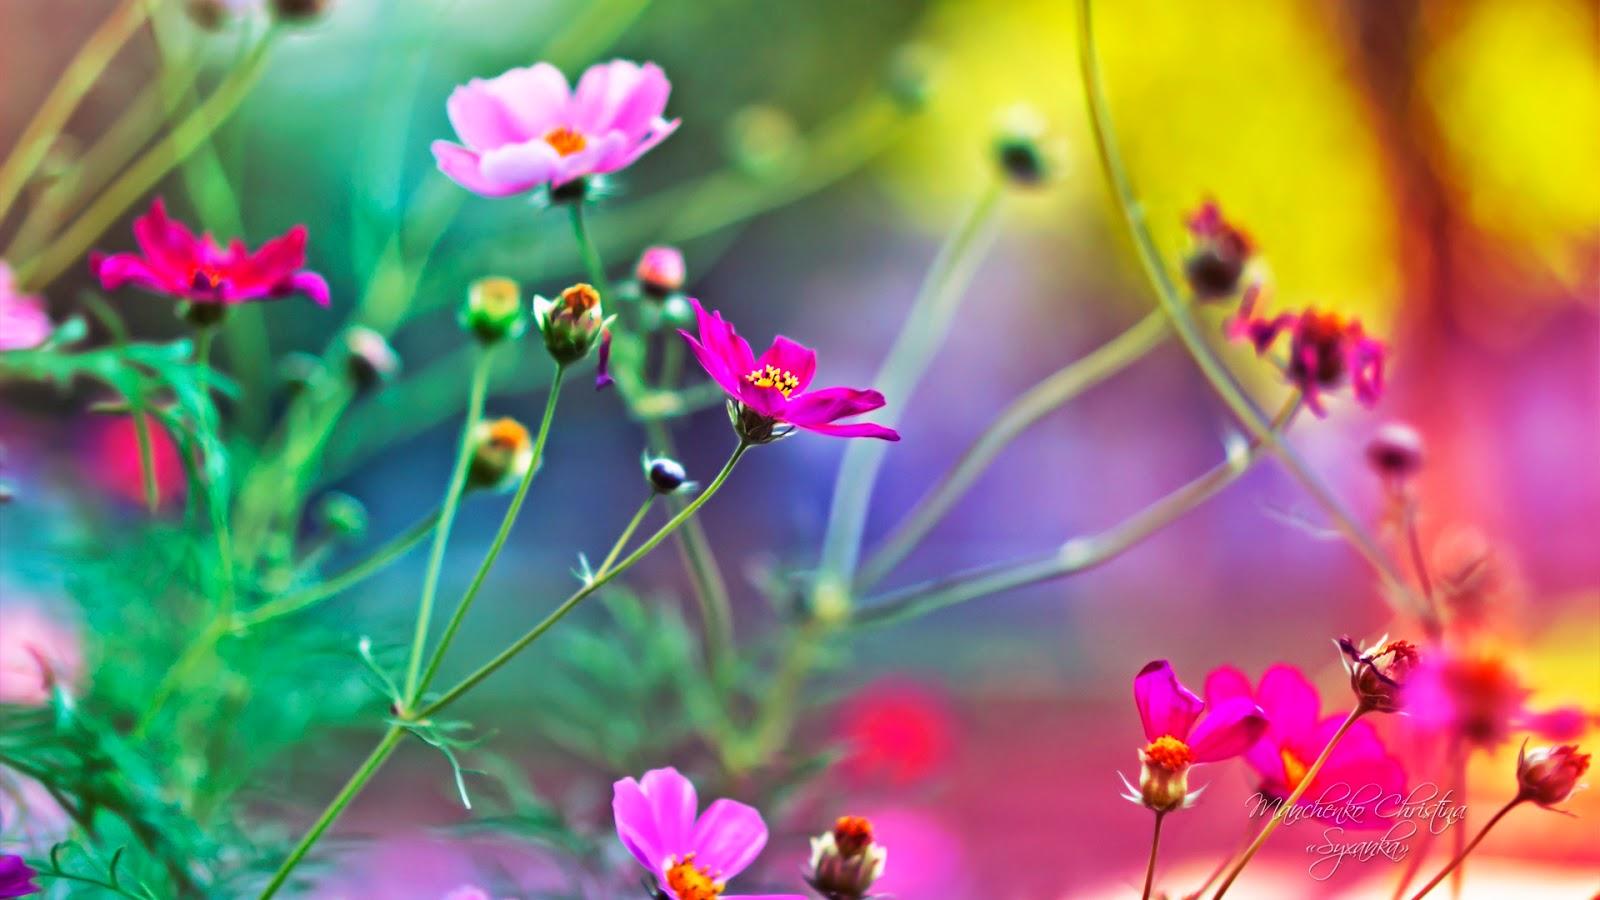 iPhone Wallpaper: HD flowers wallpaper free